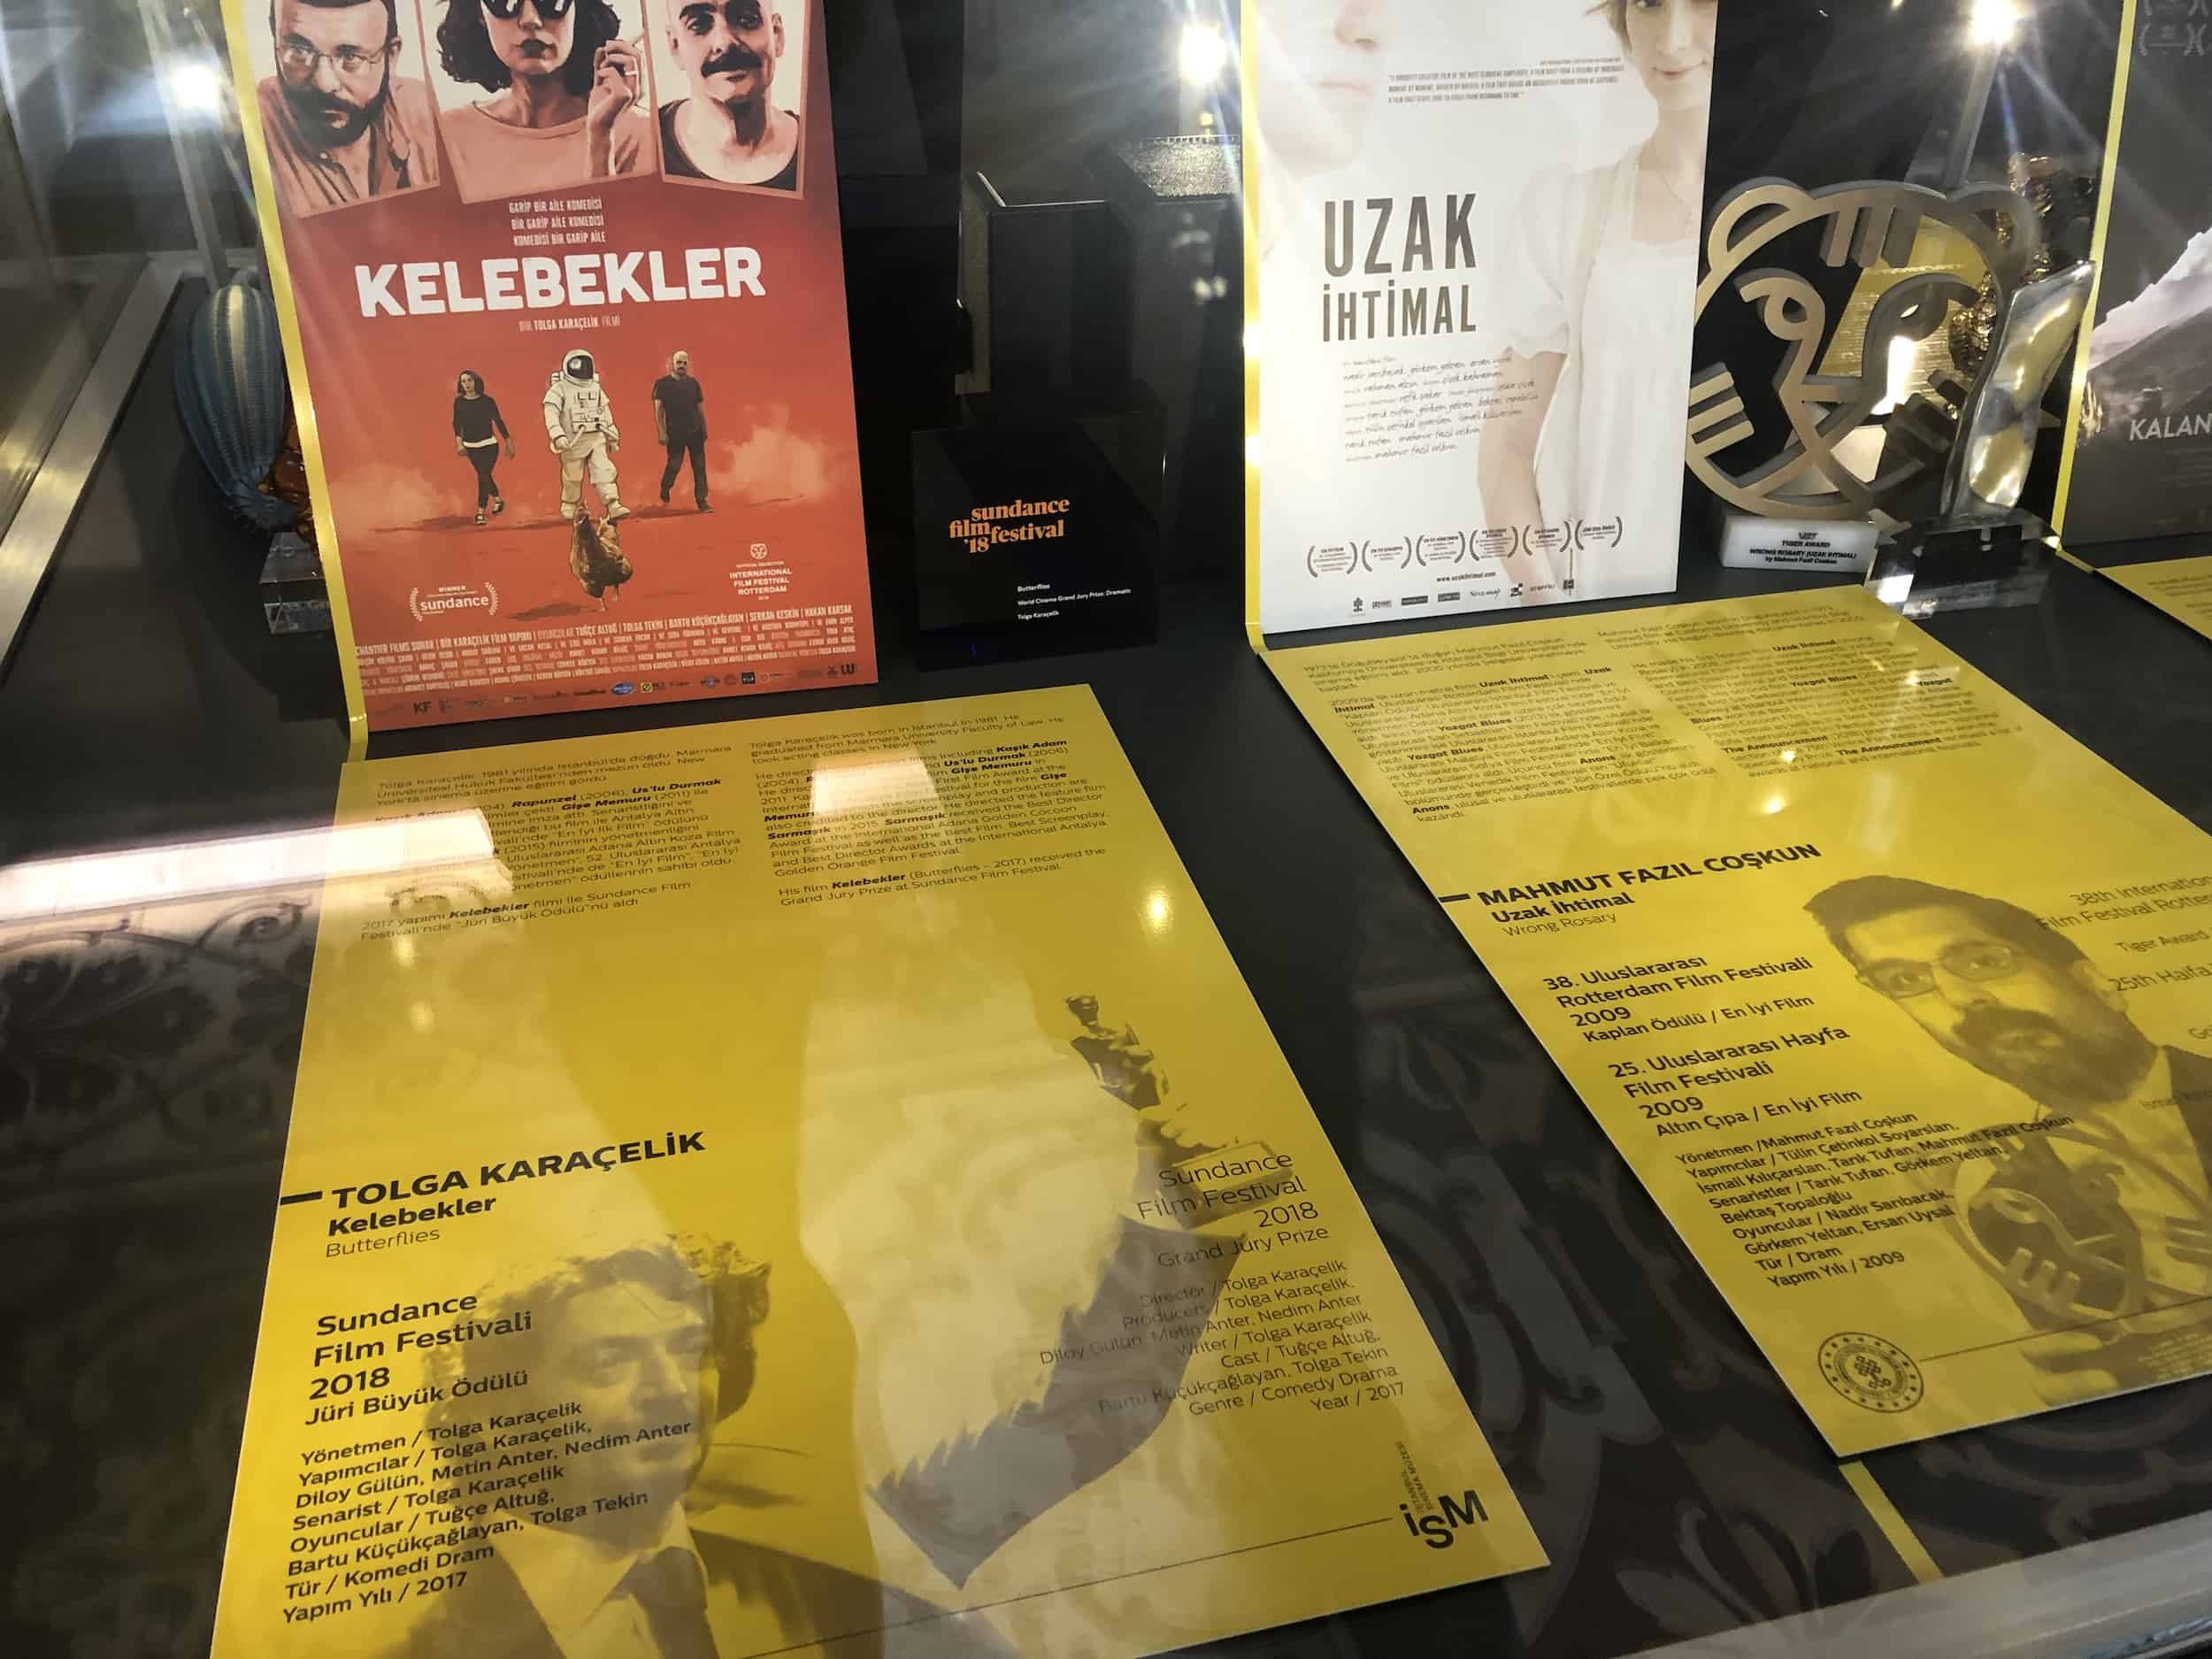 Award-winning Turkish films at the Istanbul Cinema Museum in Istanbul, Turkey